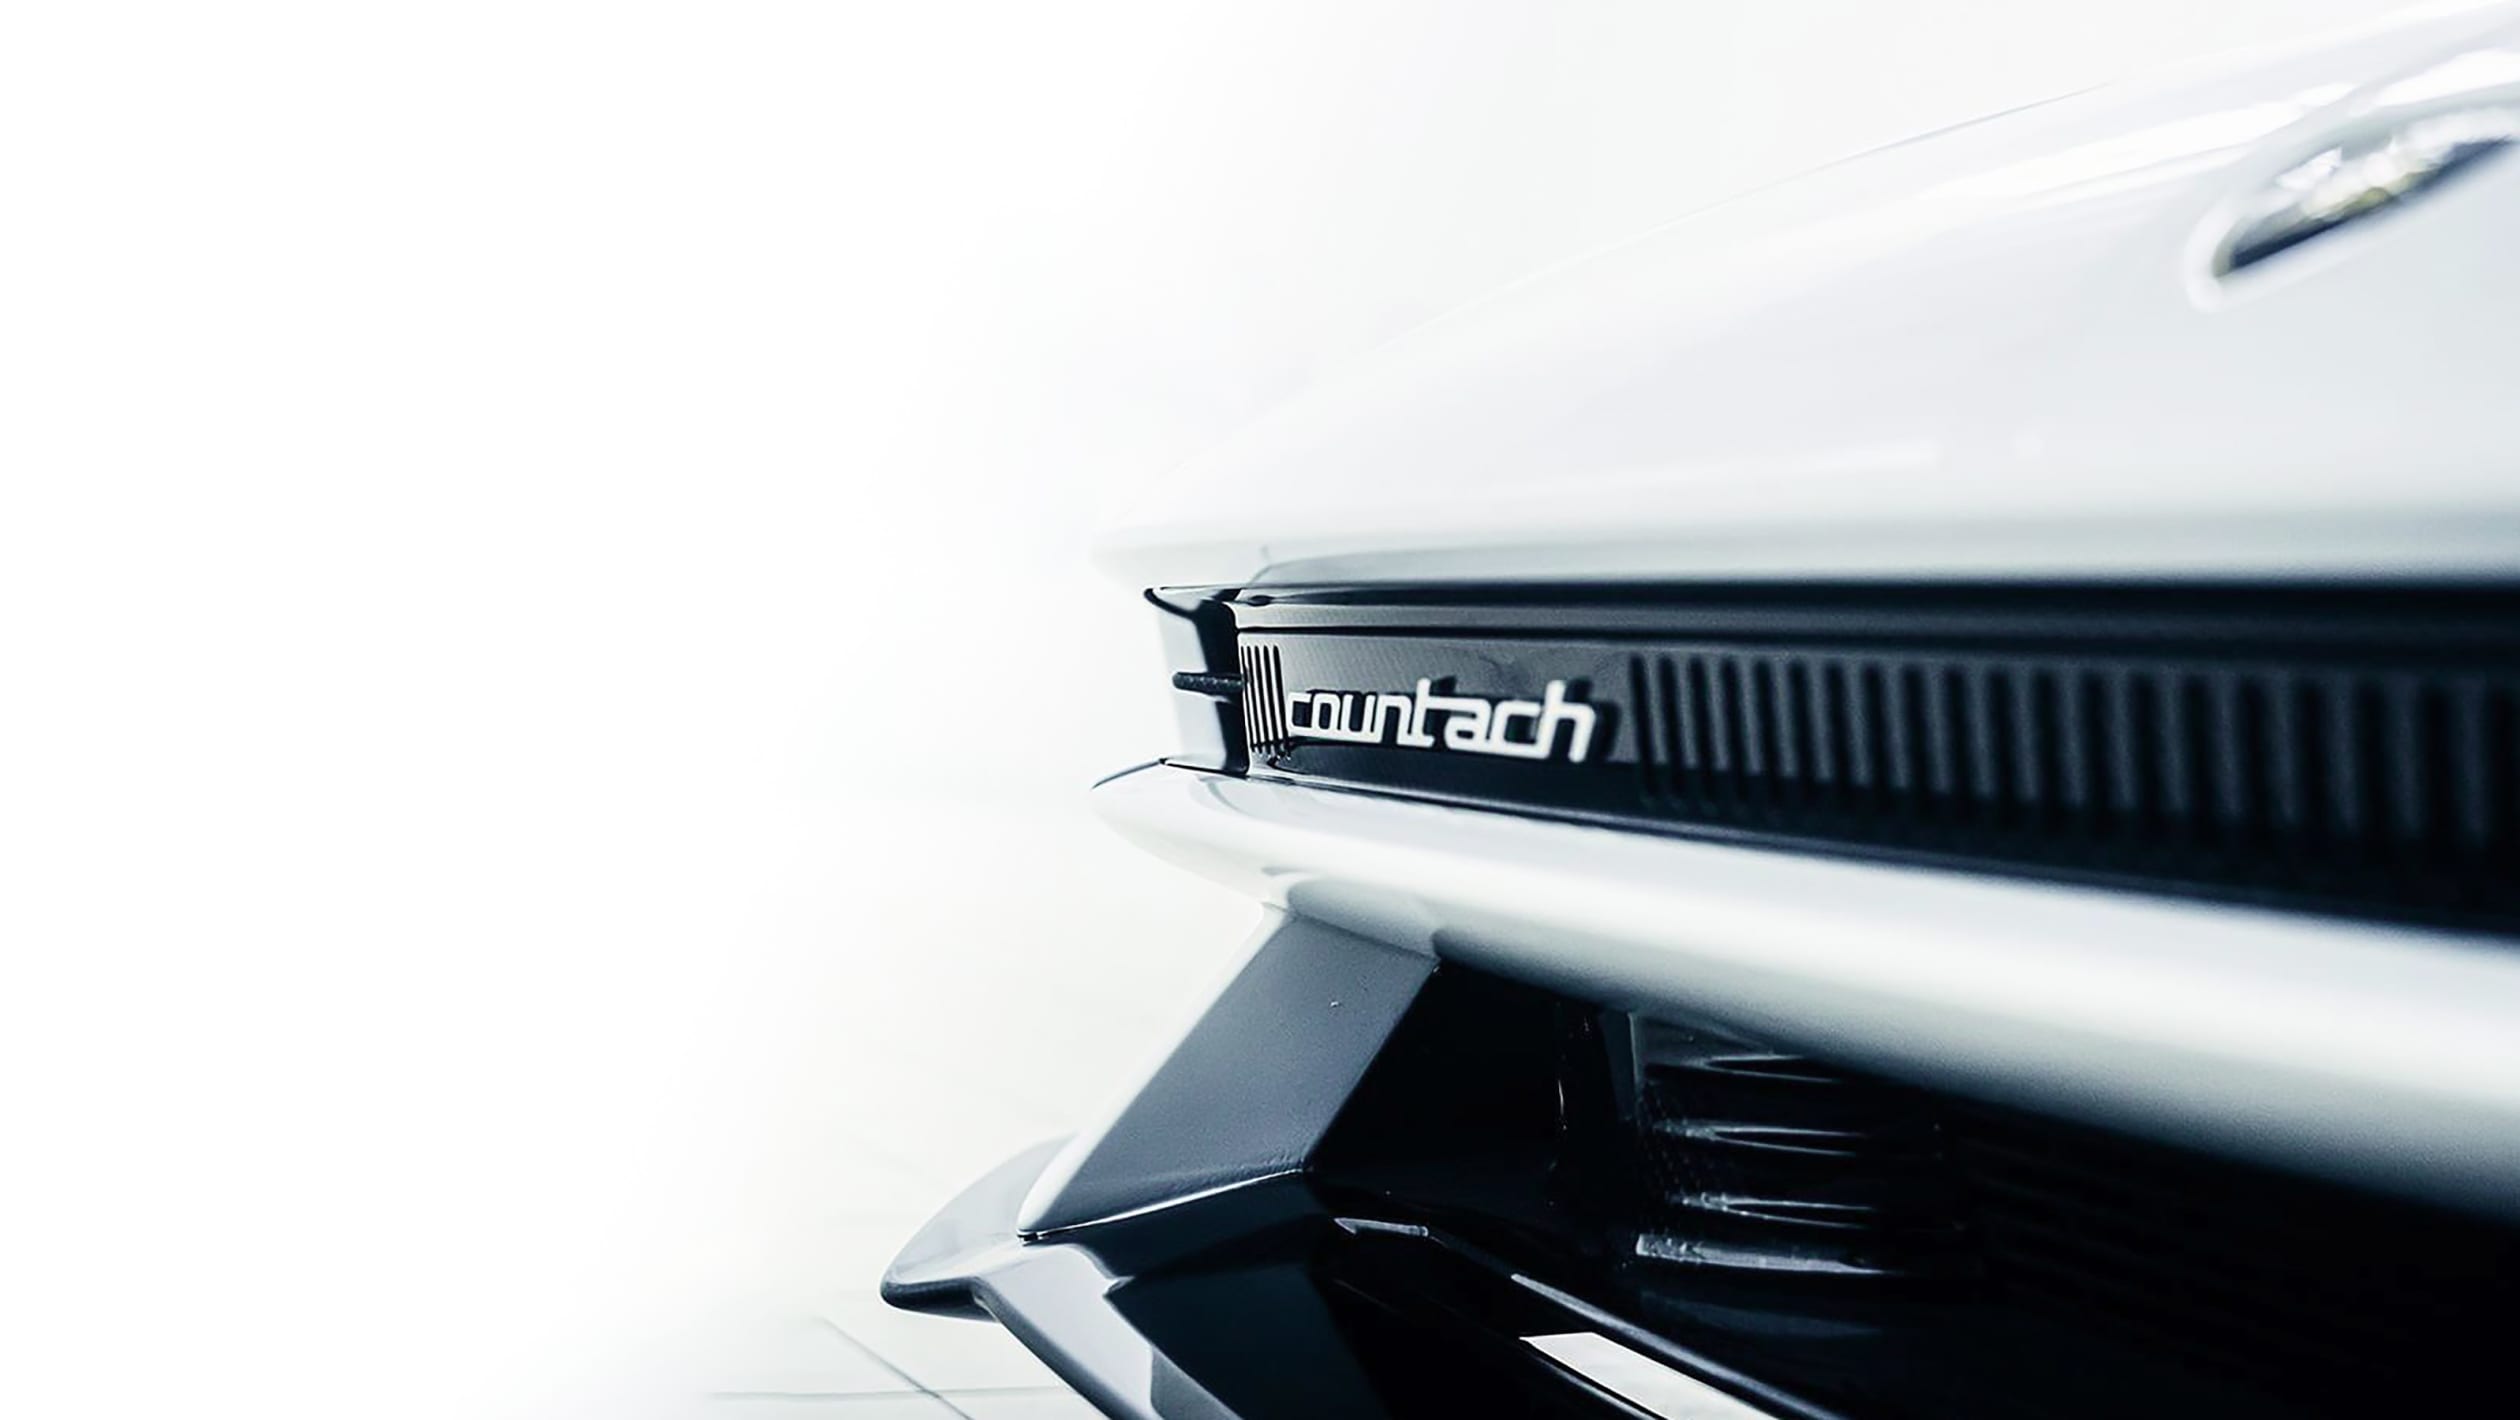 Lamborghini Countach special teaser